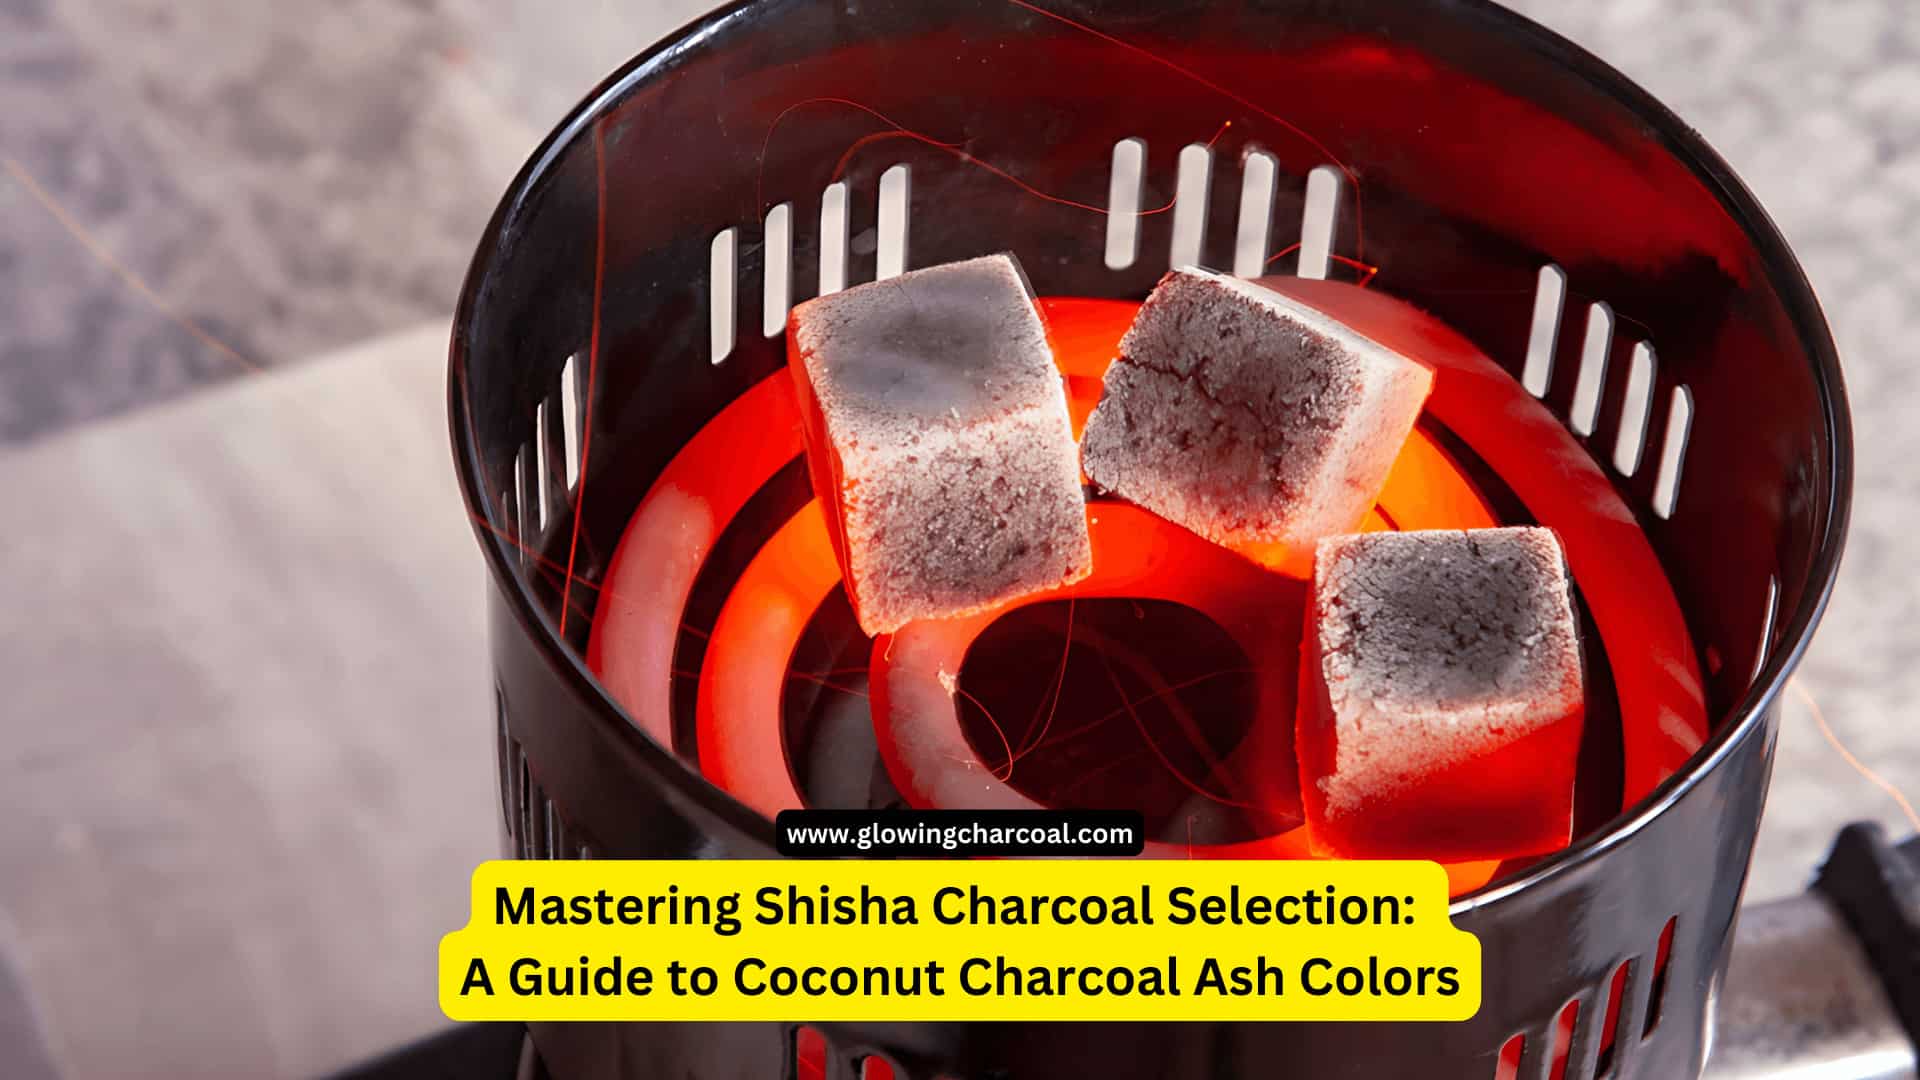 Mastering Shisha Charcoal Selection: A Guide to Coconut Charcoal Ash Colors